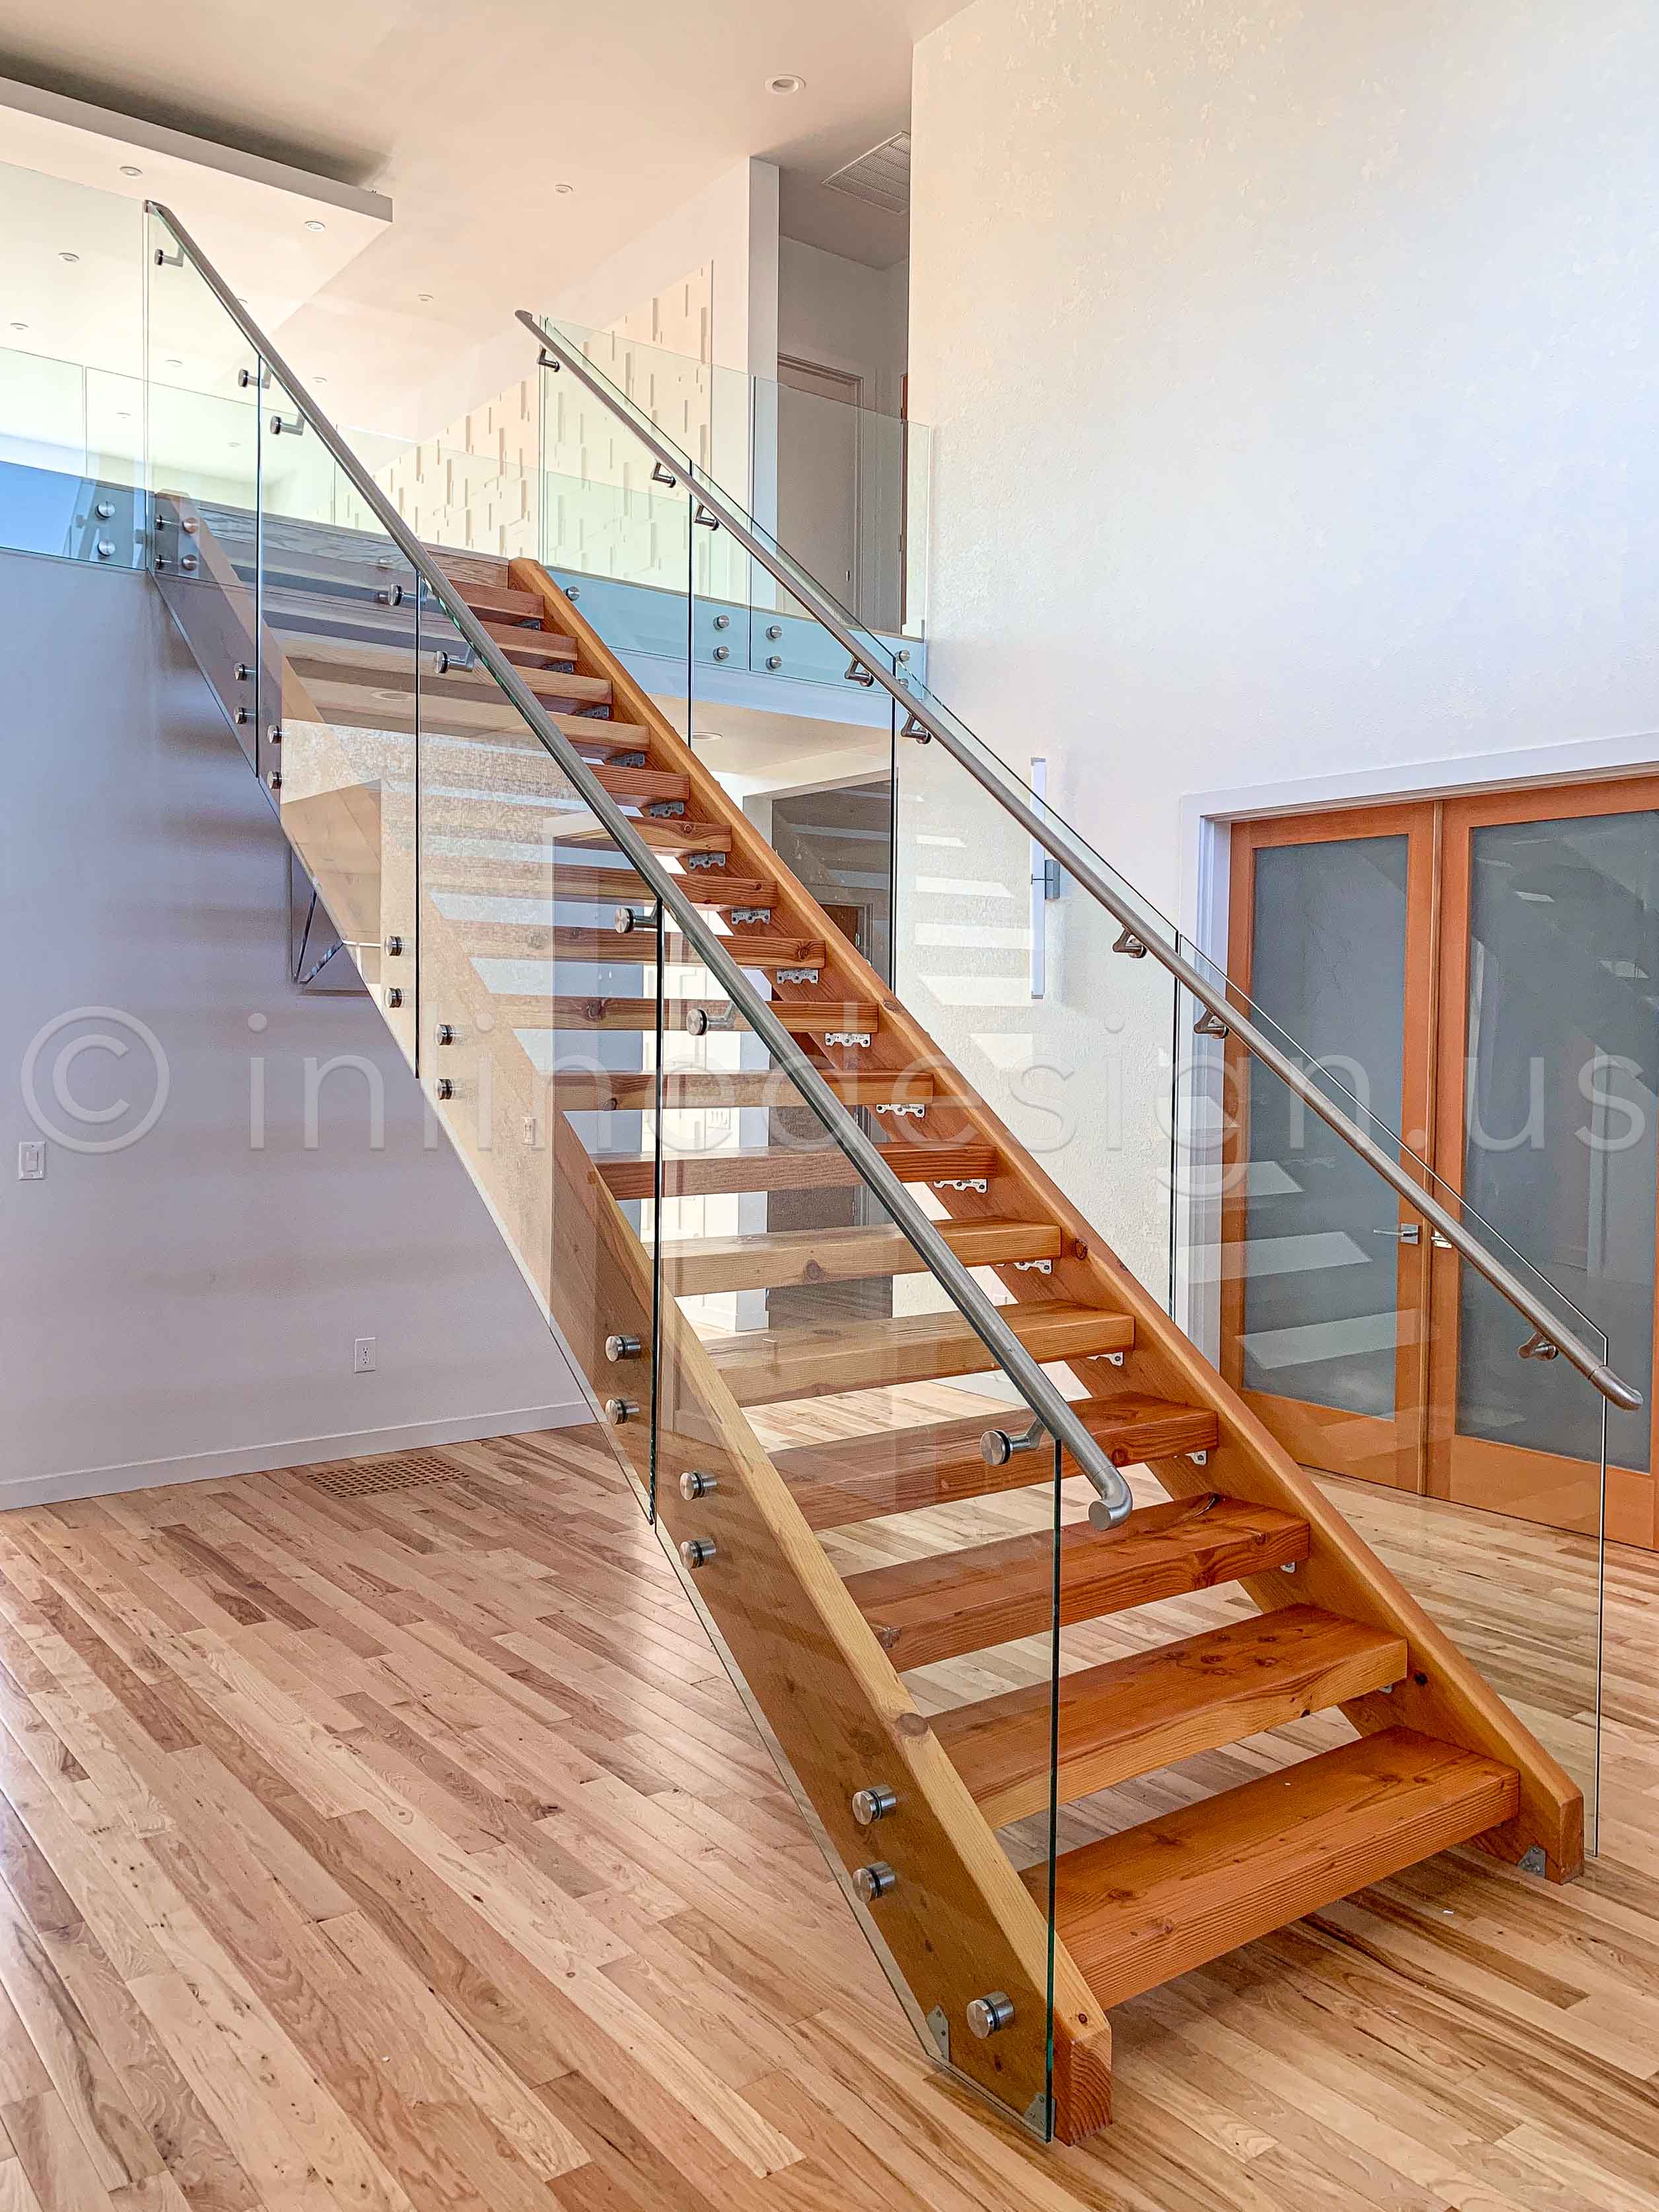 stairway modern house